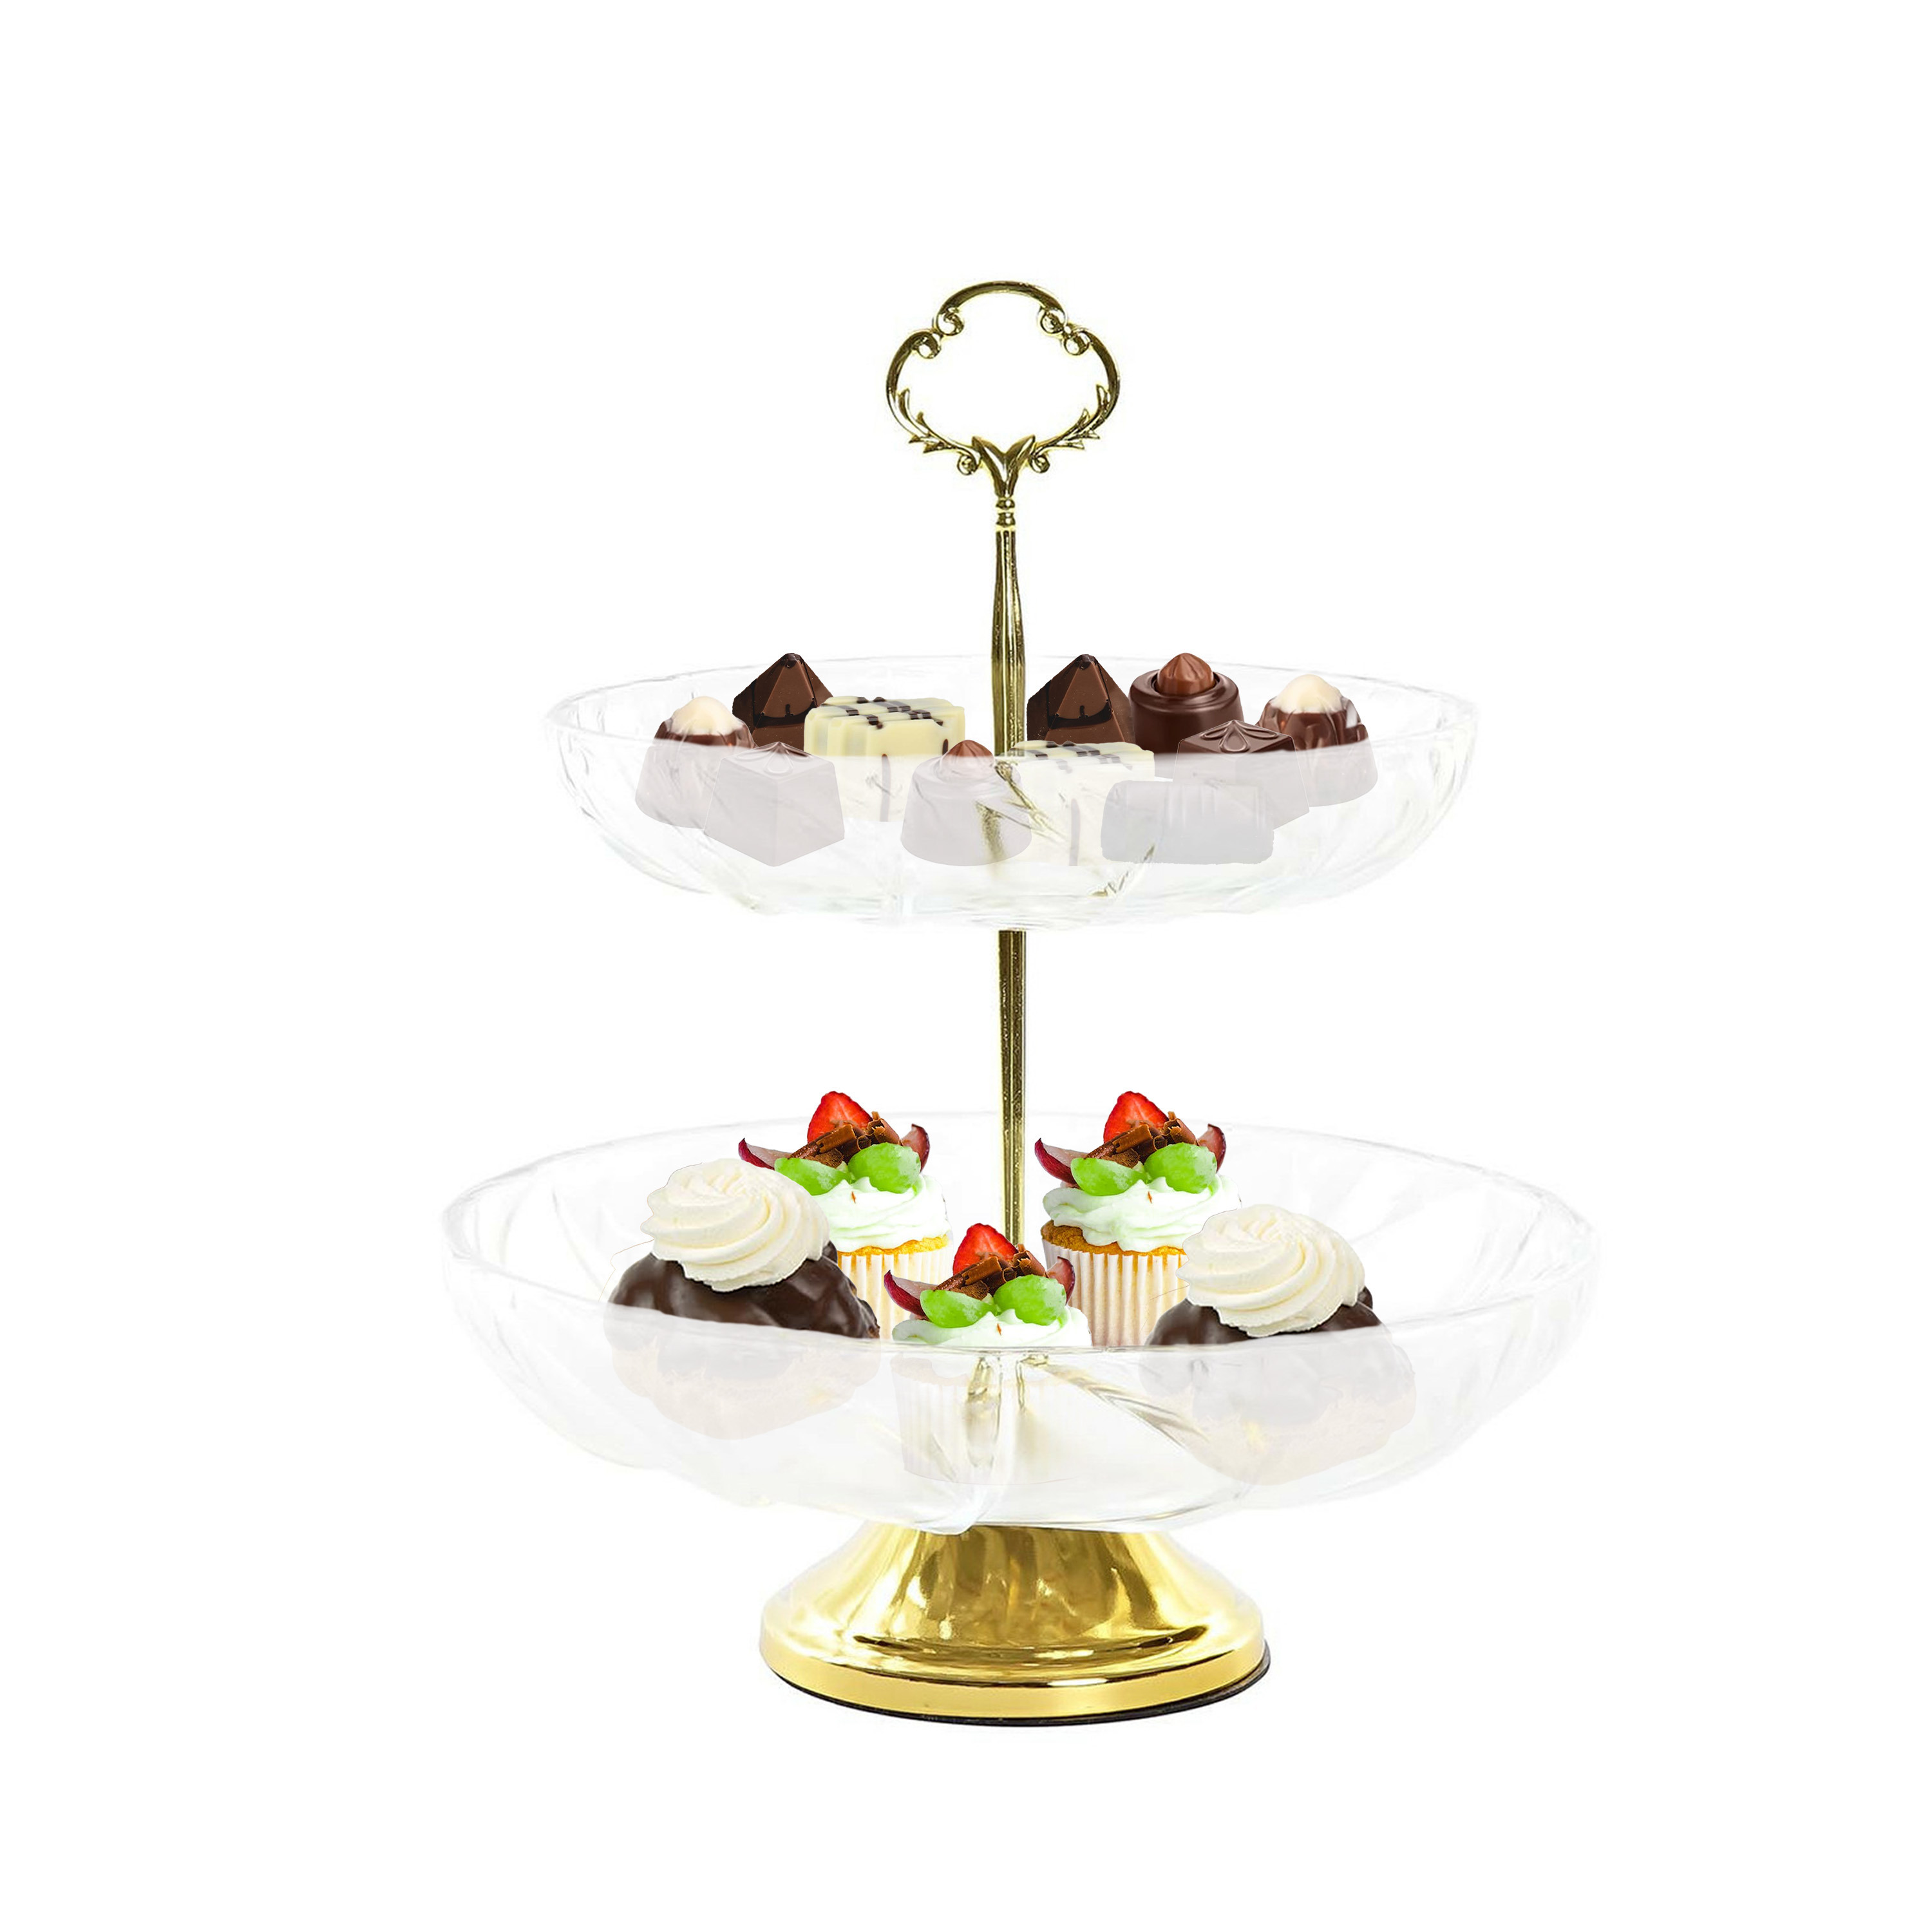 Items Design 2 laags high tea etagere goud-transparant metaal-glas 25 x 29 cm